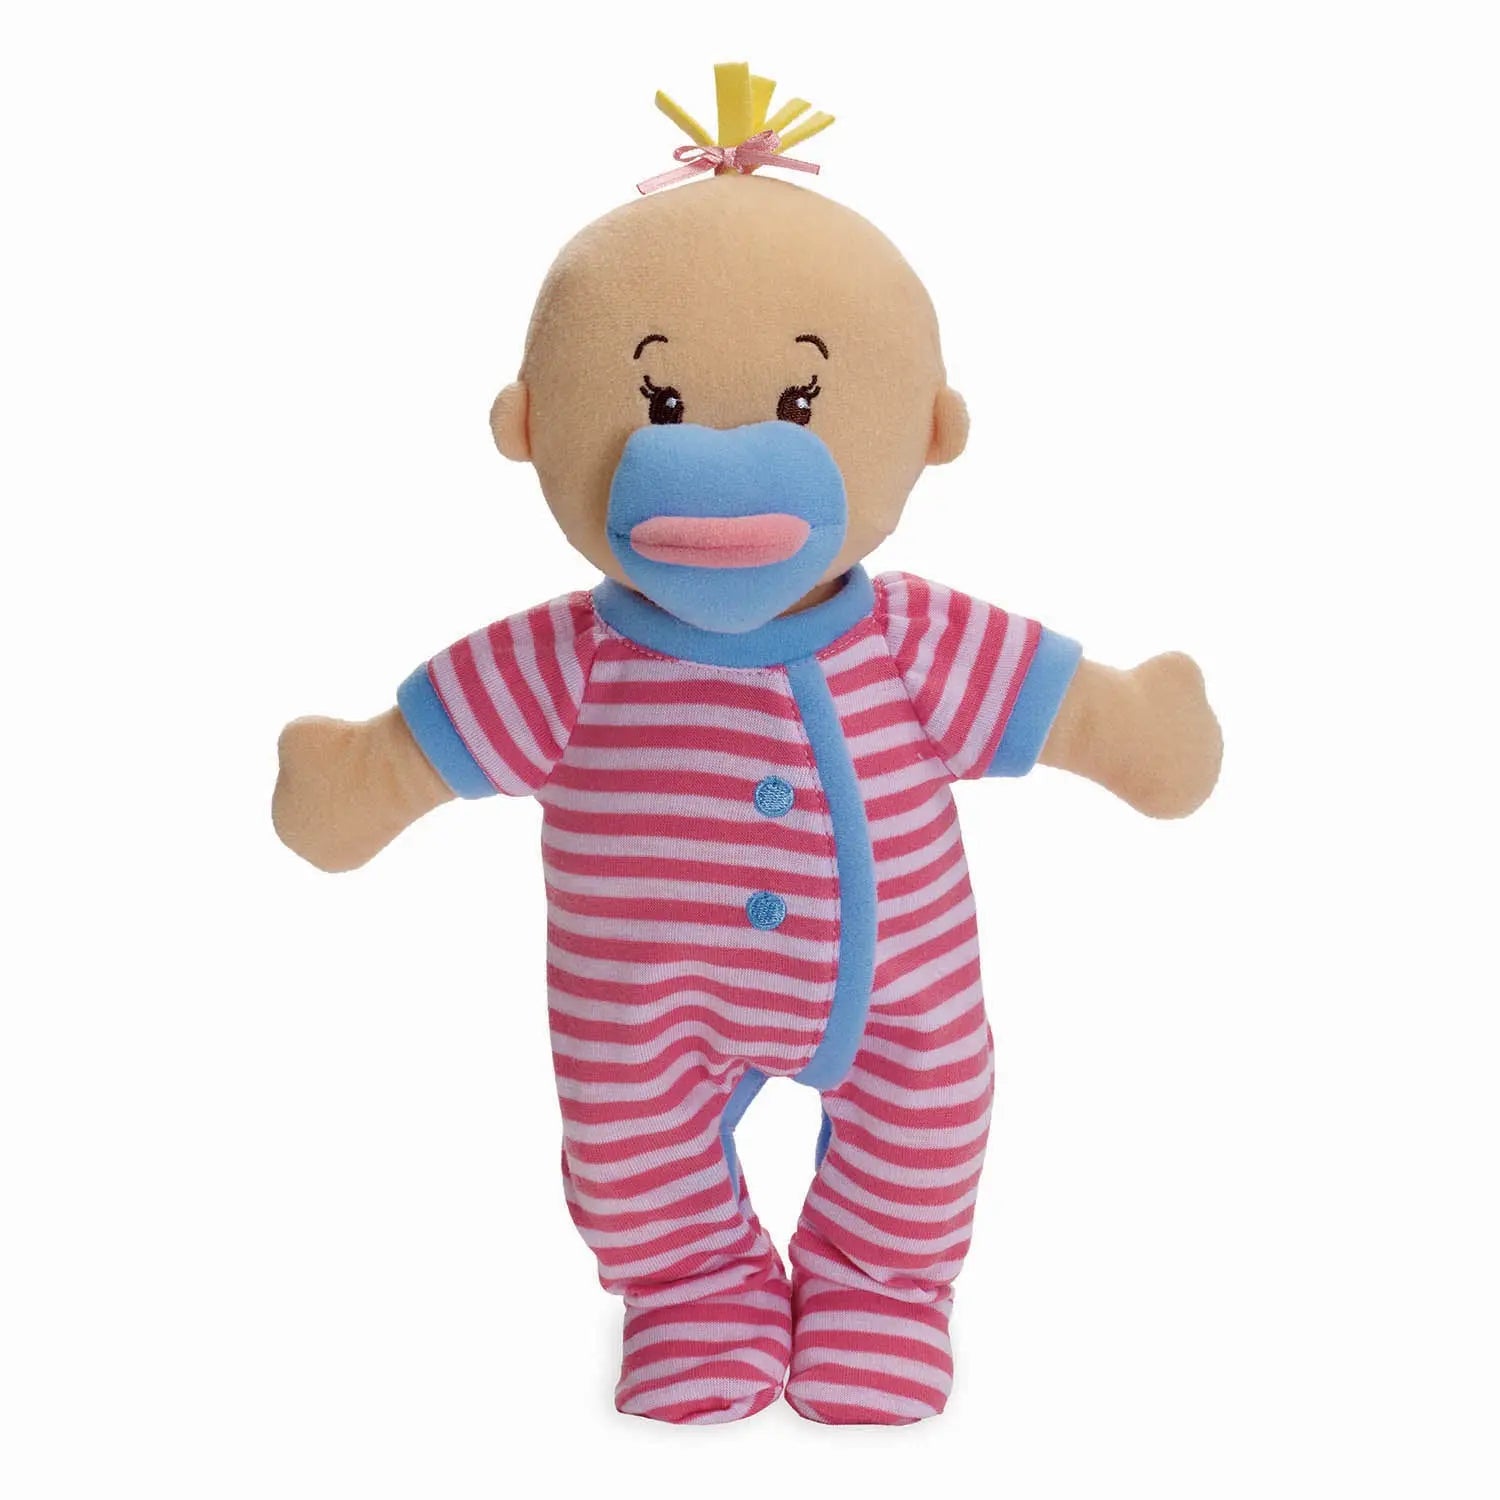 Wee Baby Stella Dolls - Manhattan Toy Company